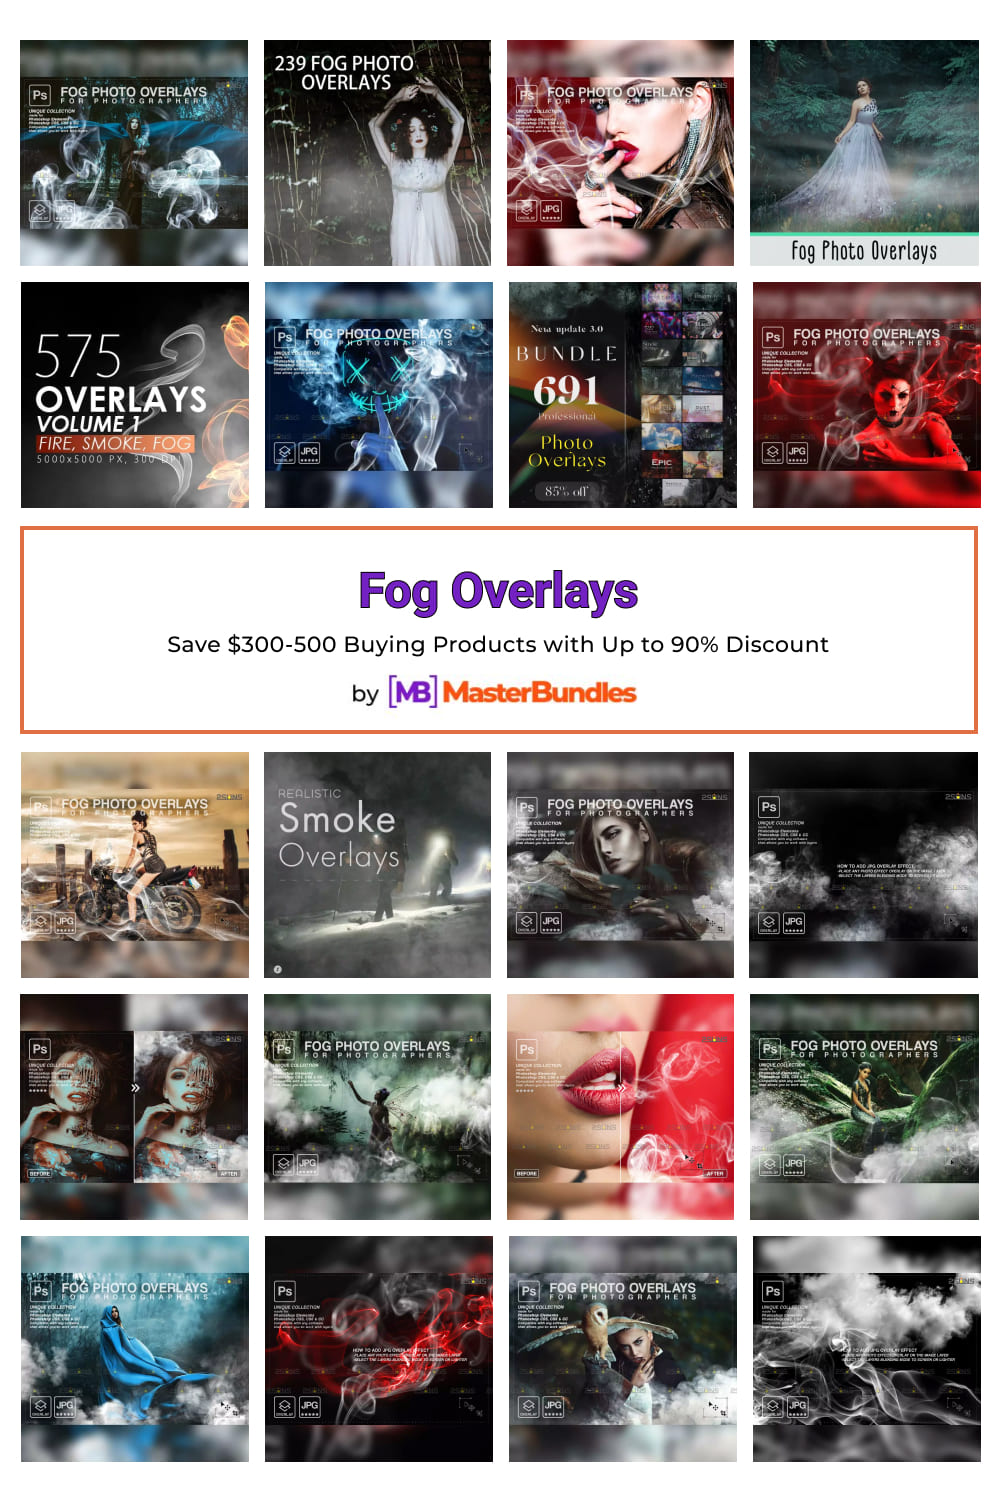 Fog Overlays Pinterest image.